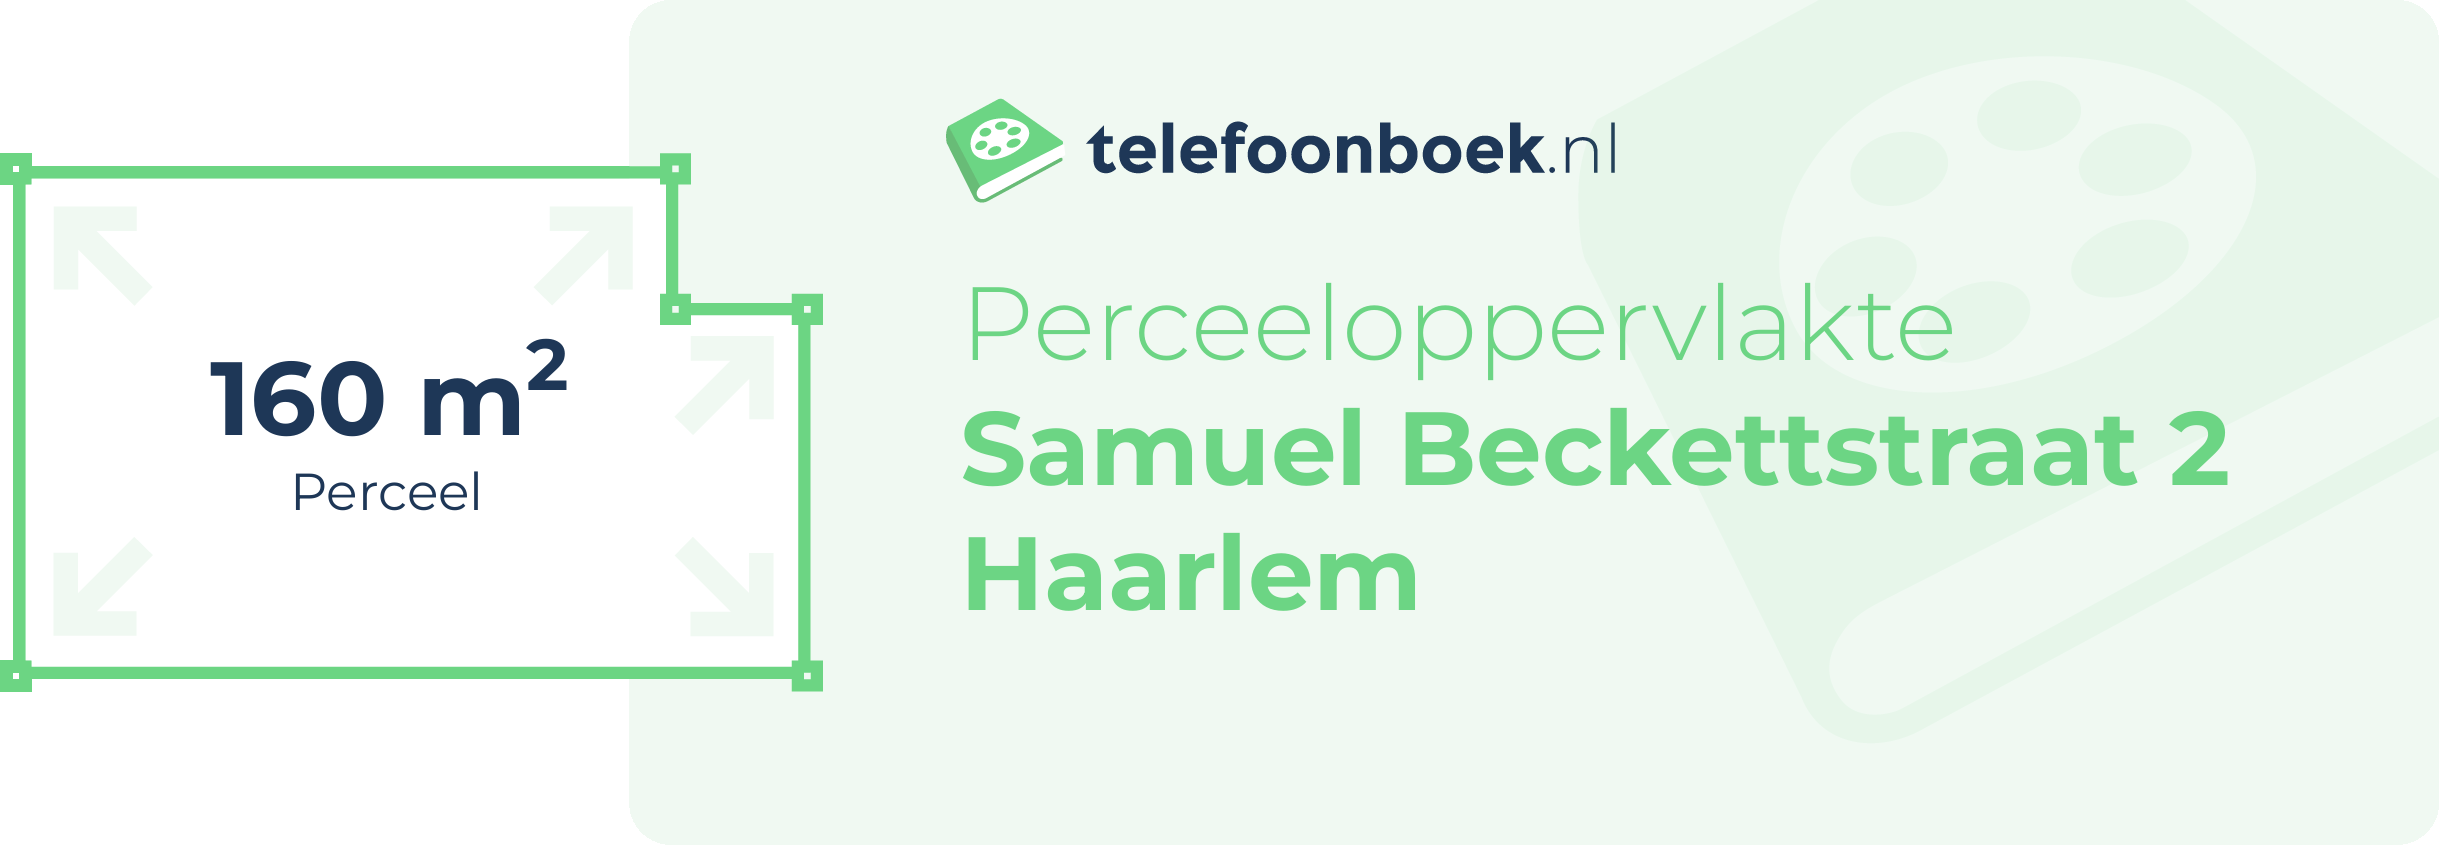 Perceeloppervlakte Samuel Beckettstraat 2 Haarlem